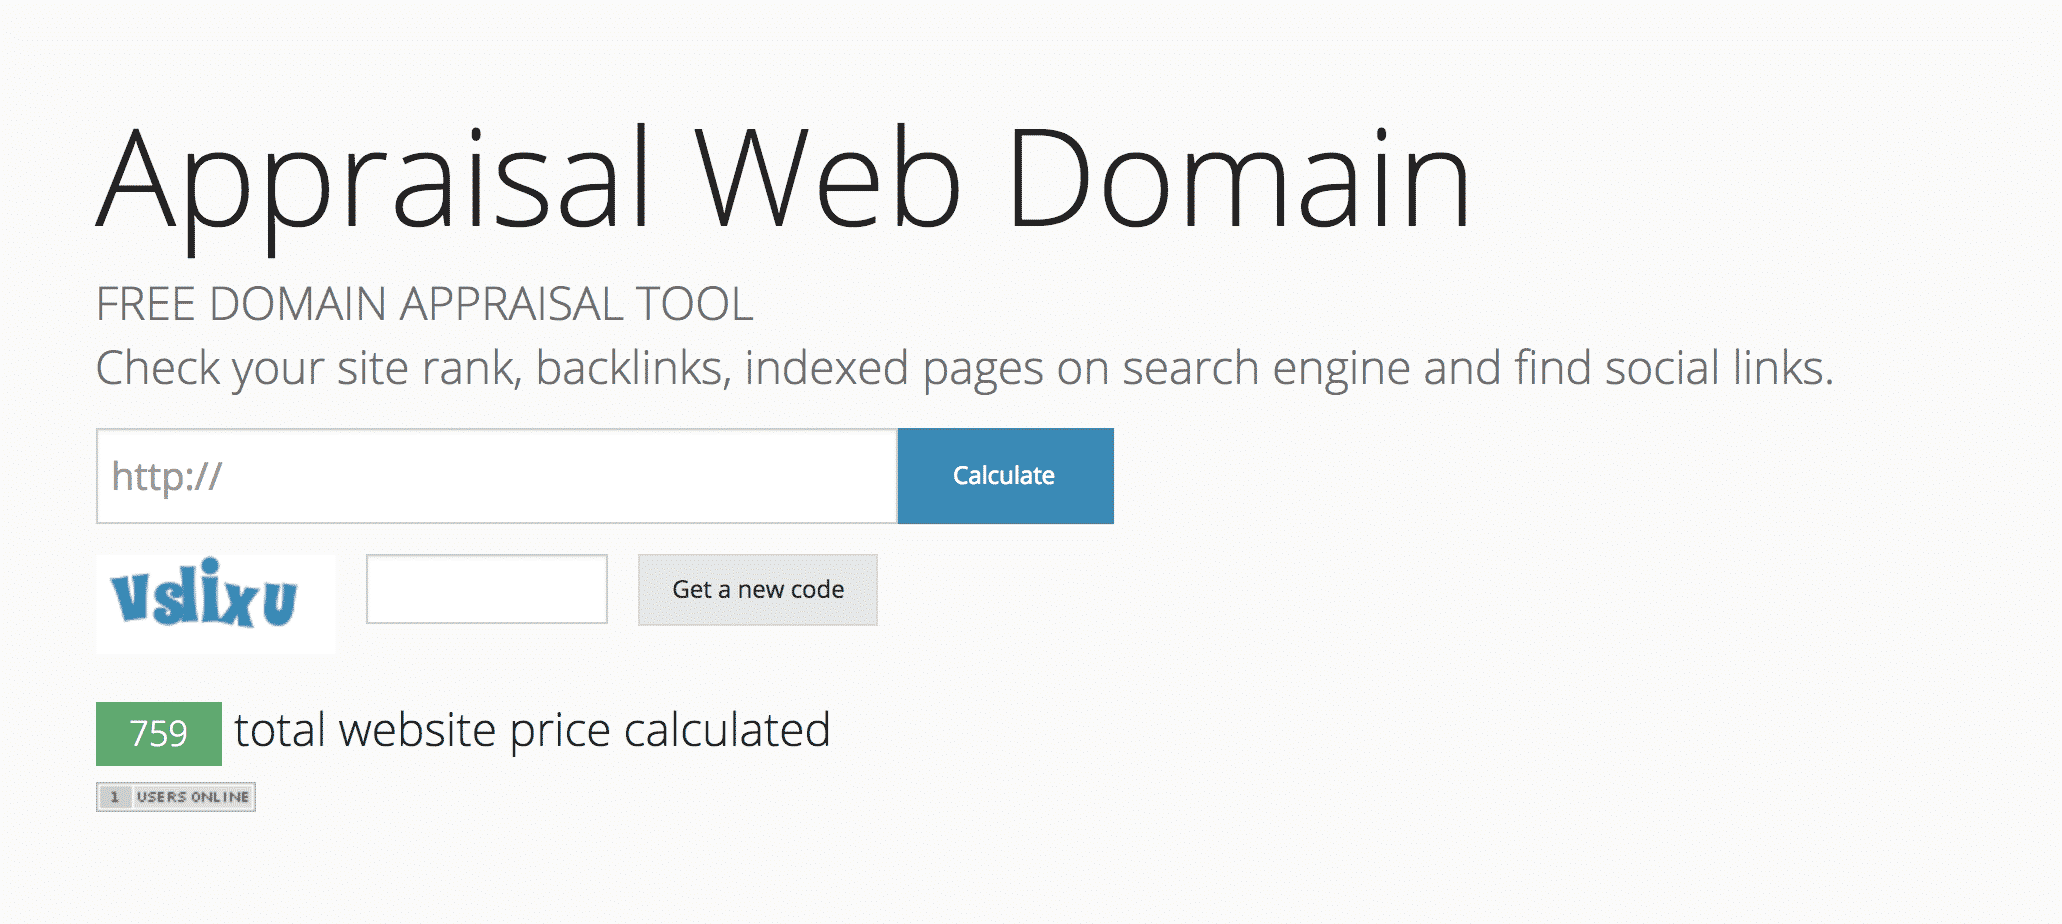 Appraisal Web Domain